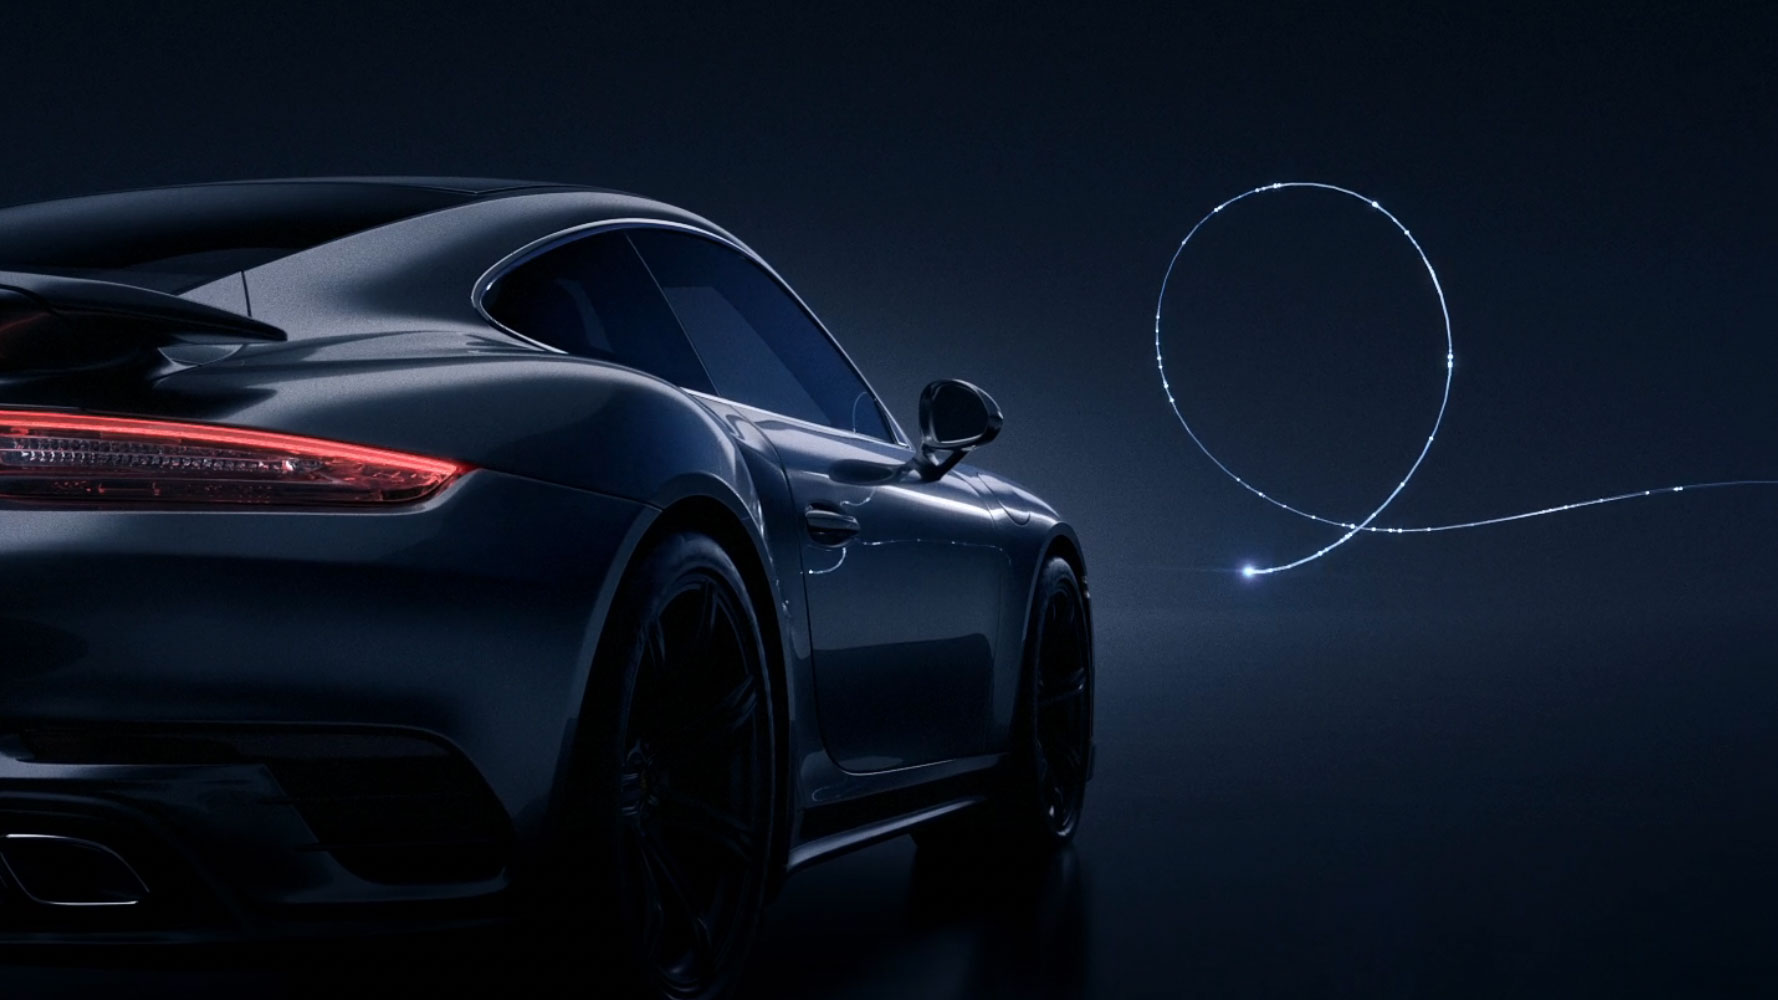 Porsche "Elan Vital" Spec Spot by Daniel Bartels | STASH MAGAZINE